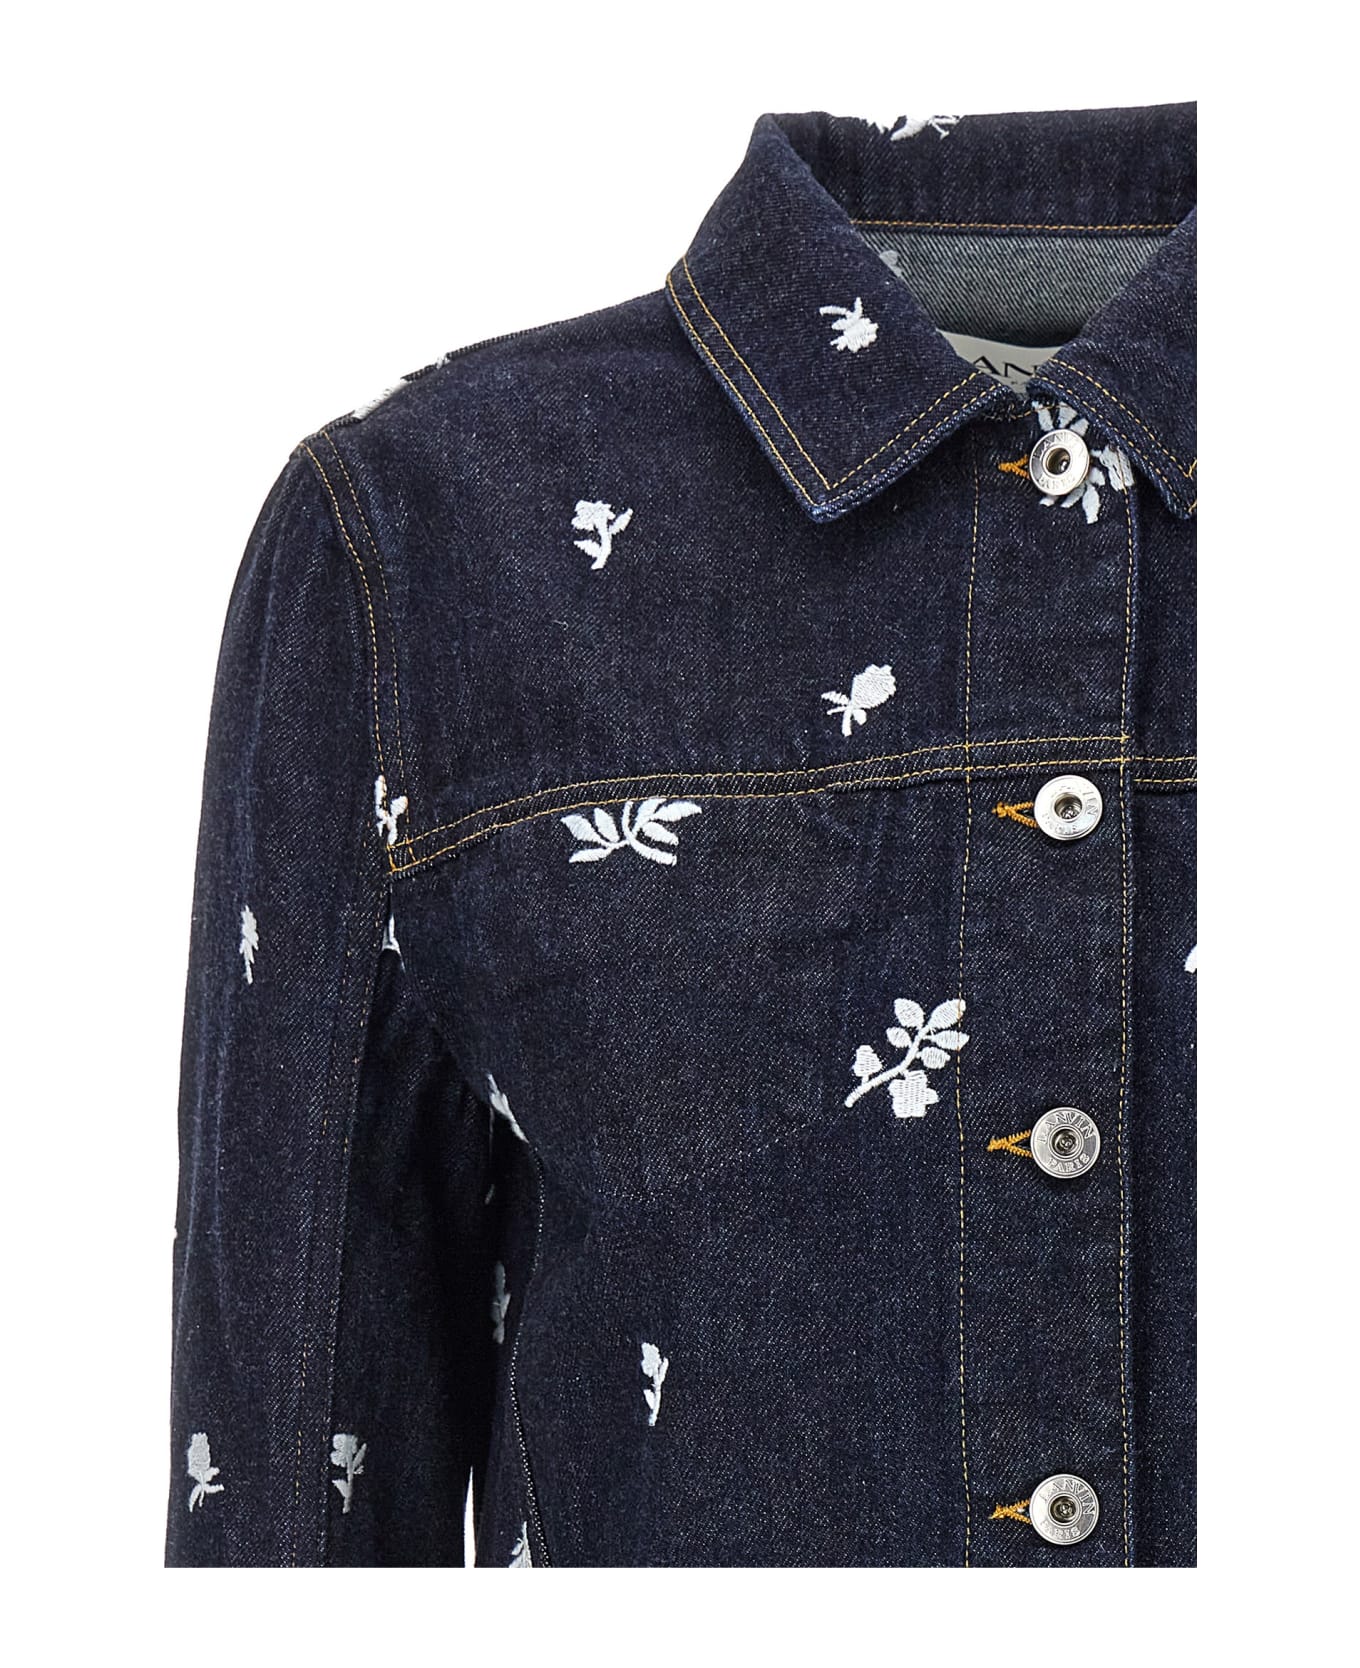 Lanvin Floral Embroidery Jacket - Blue